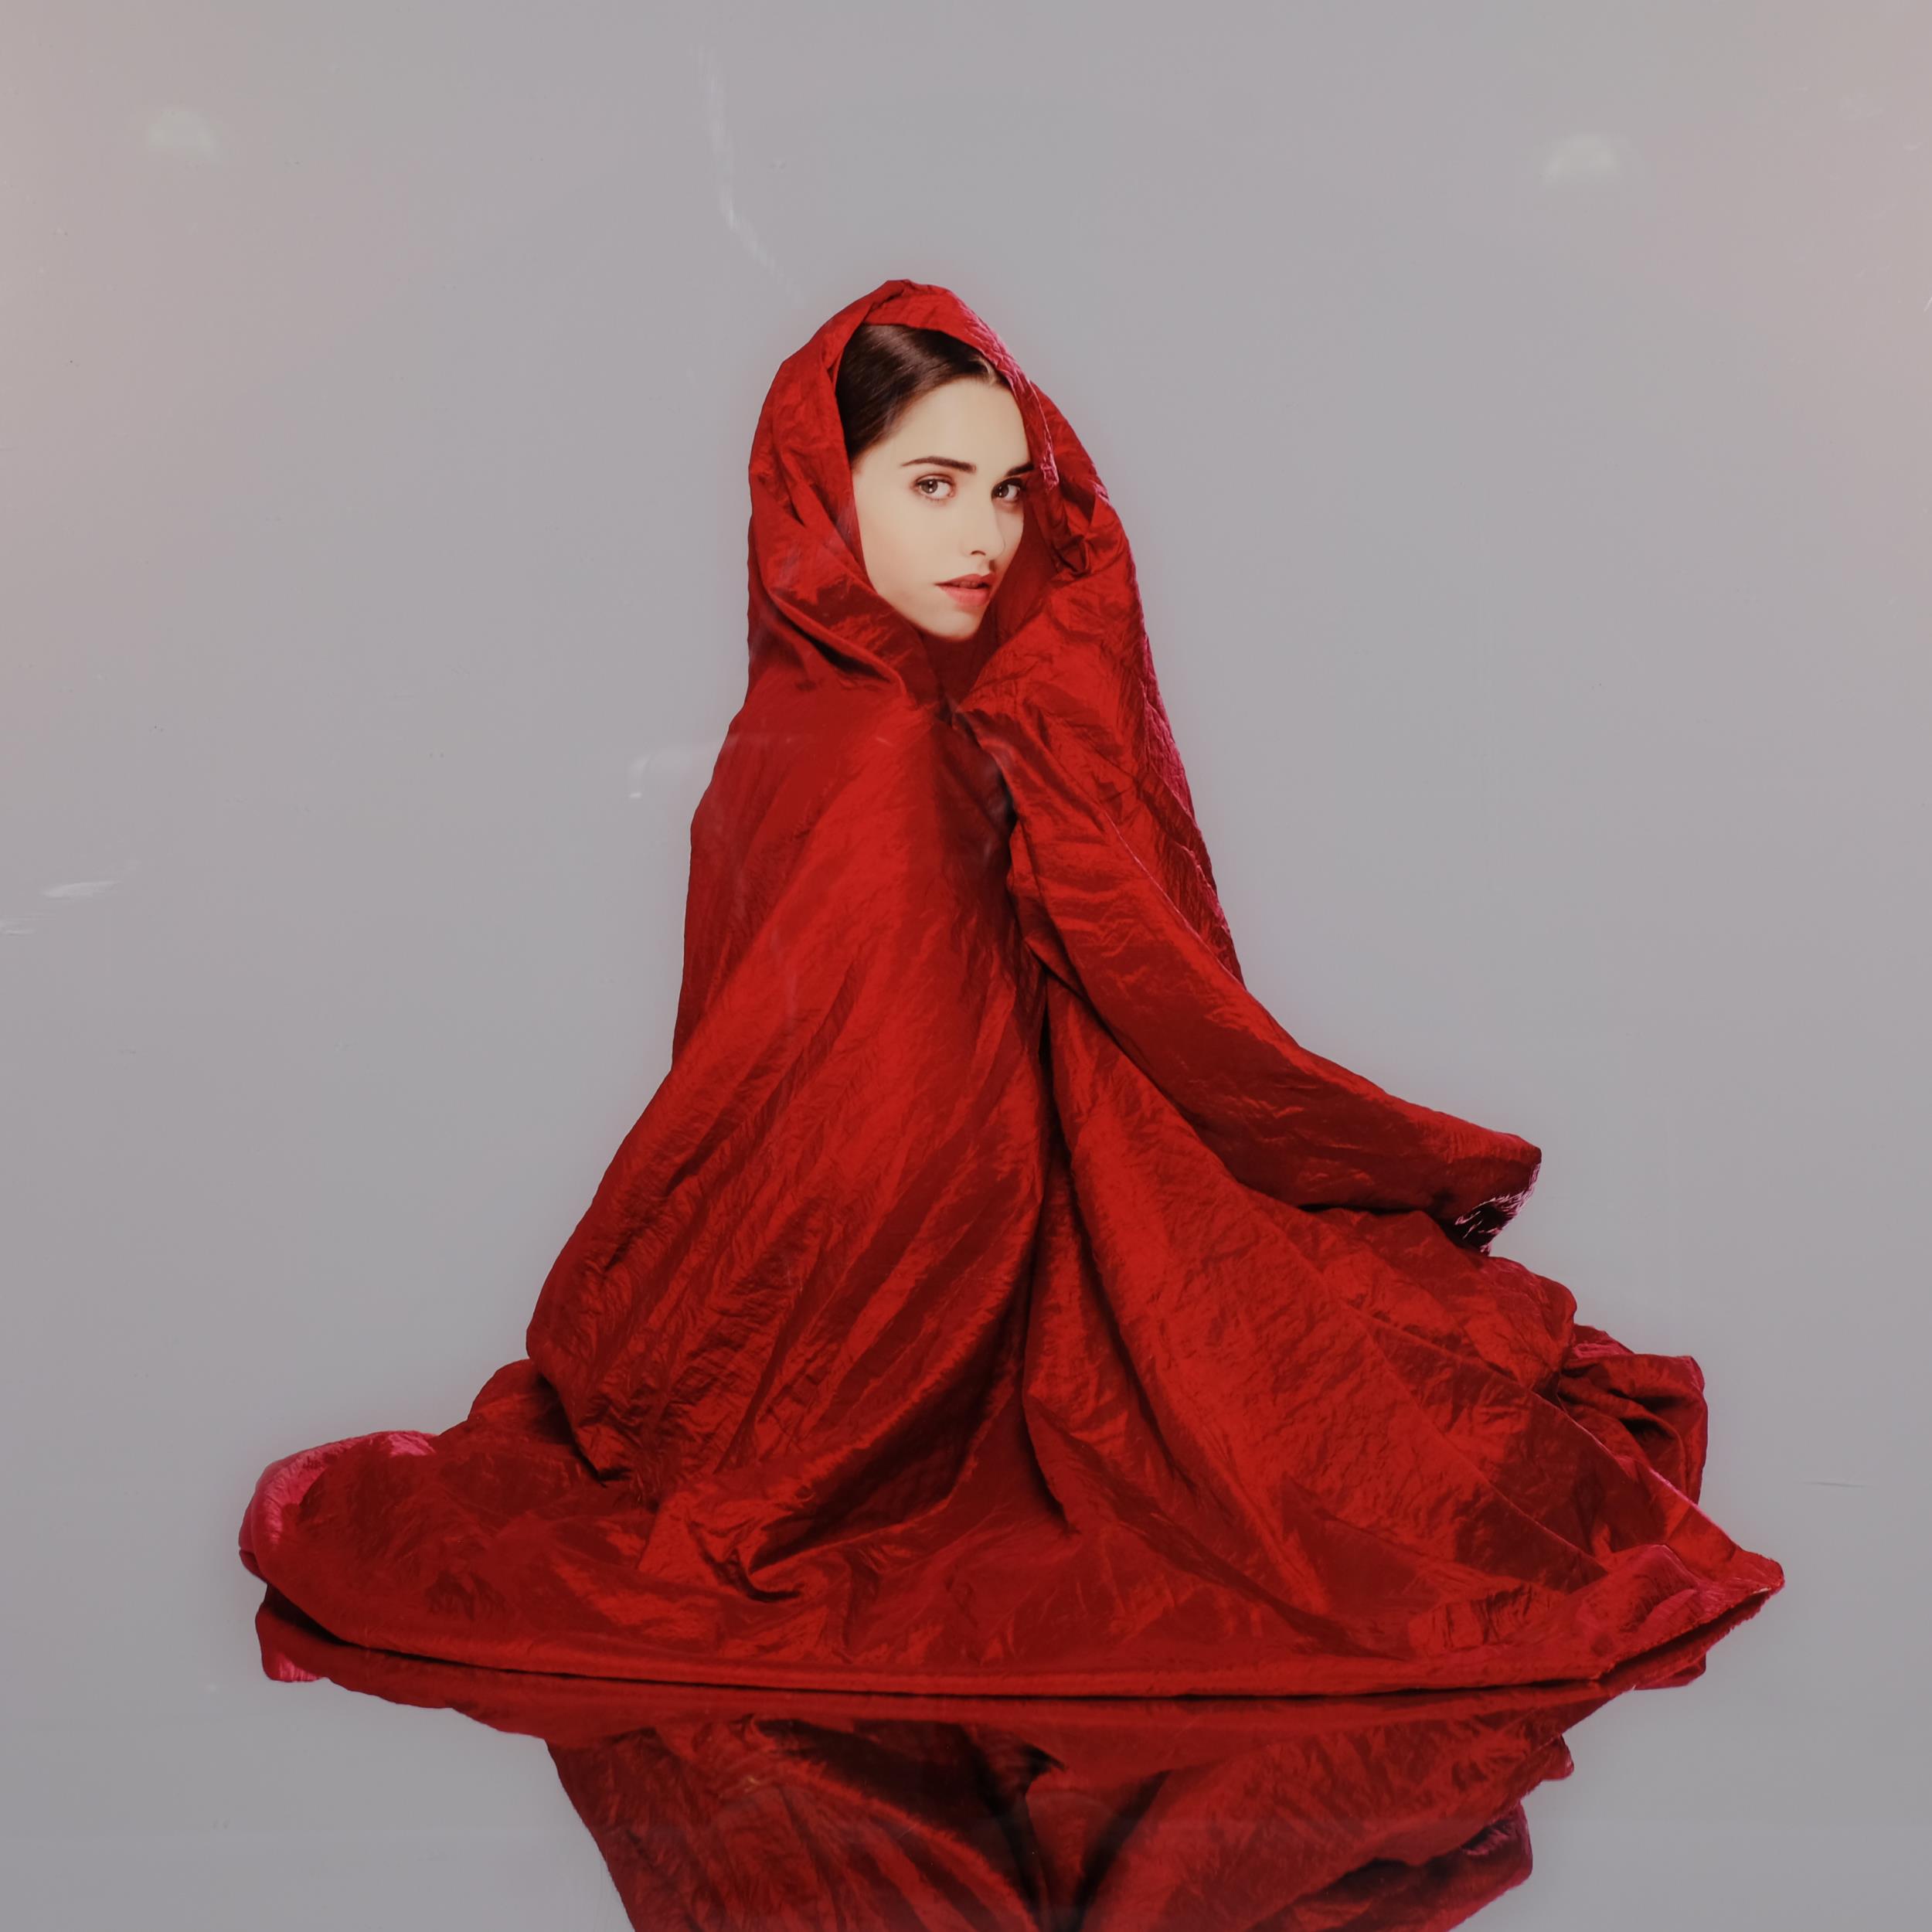 Maya de Almedia Araujo, a contemporary photograph, reflections in red, perspex front, - Image 3 of 4